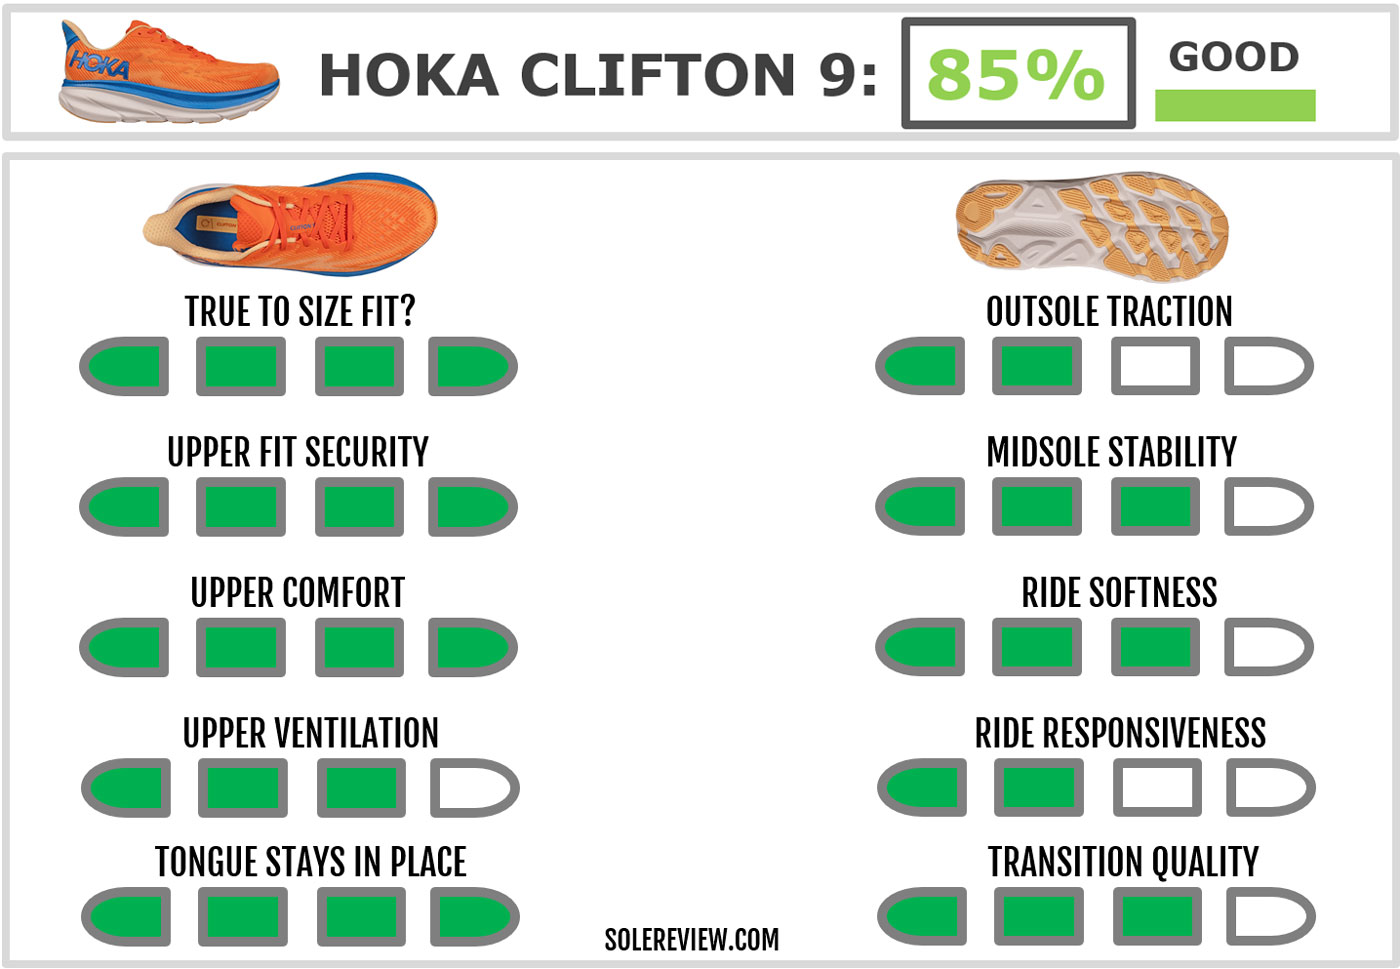 The overall score of the Hoka Clifton 9.